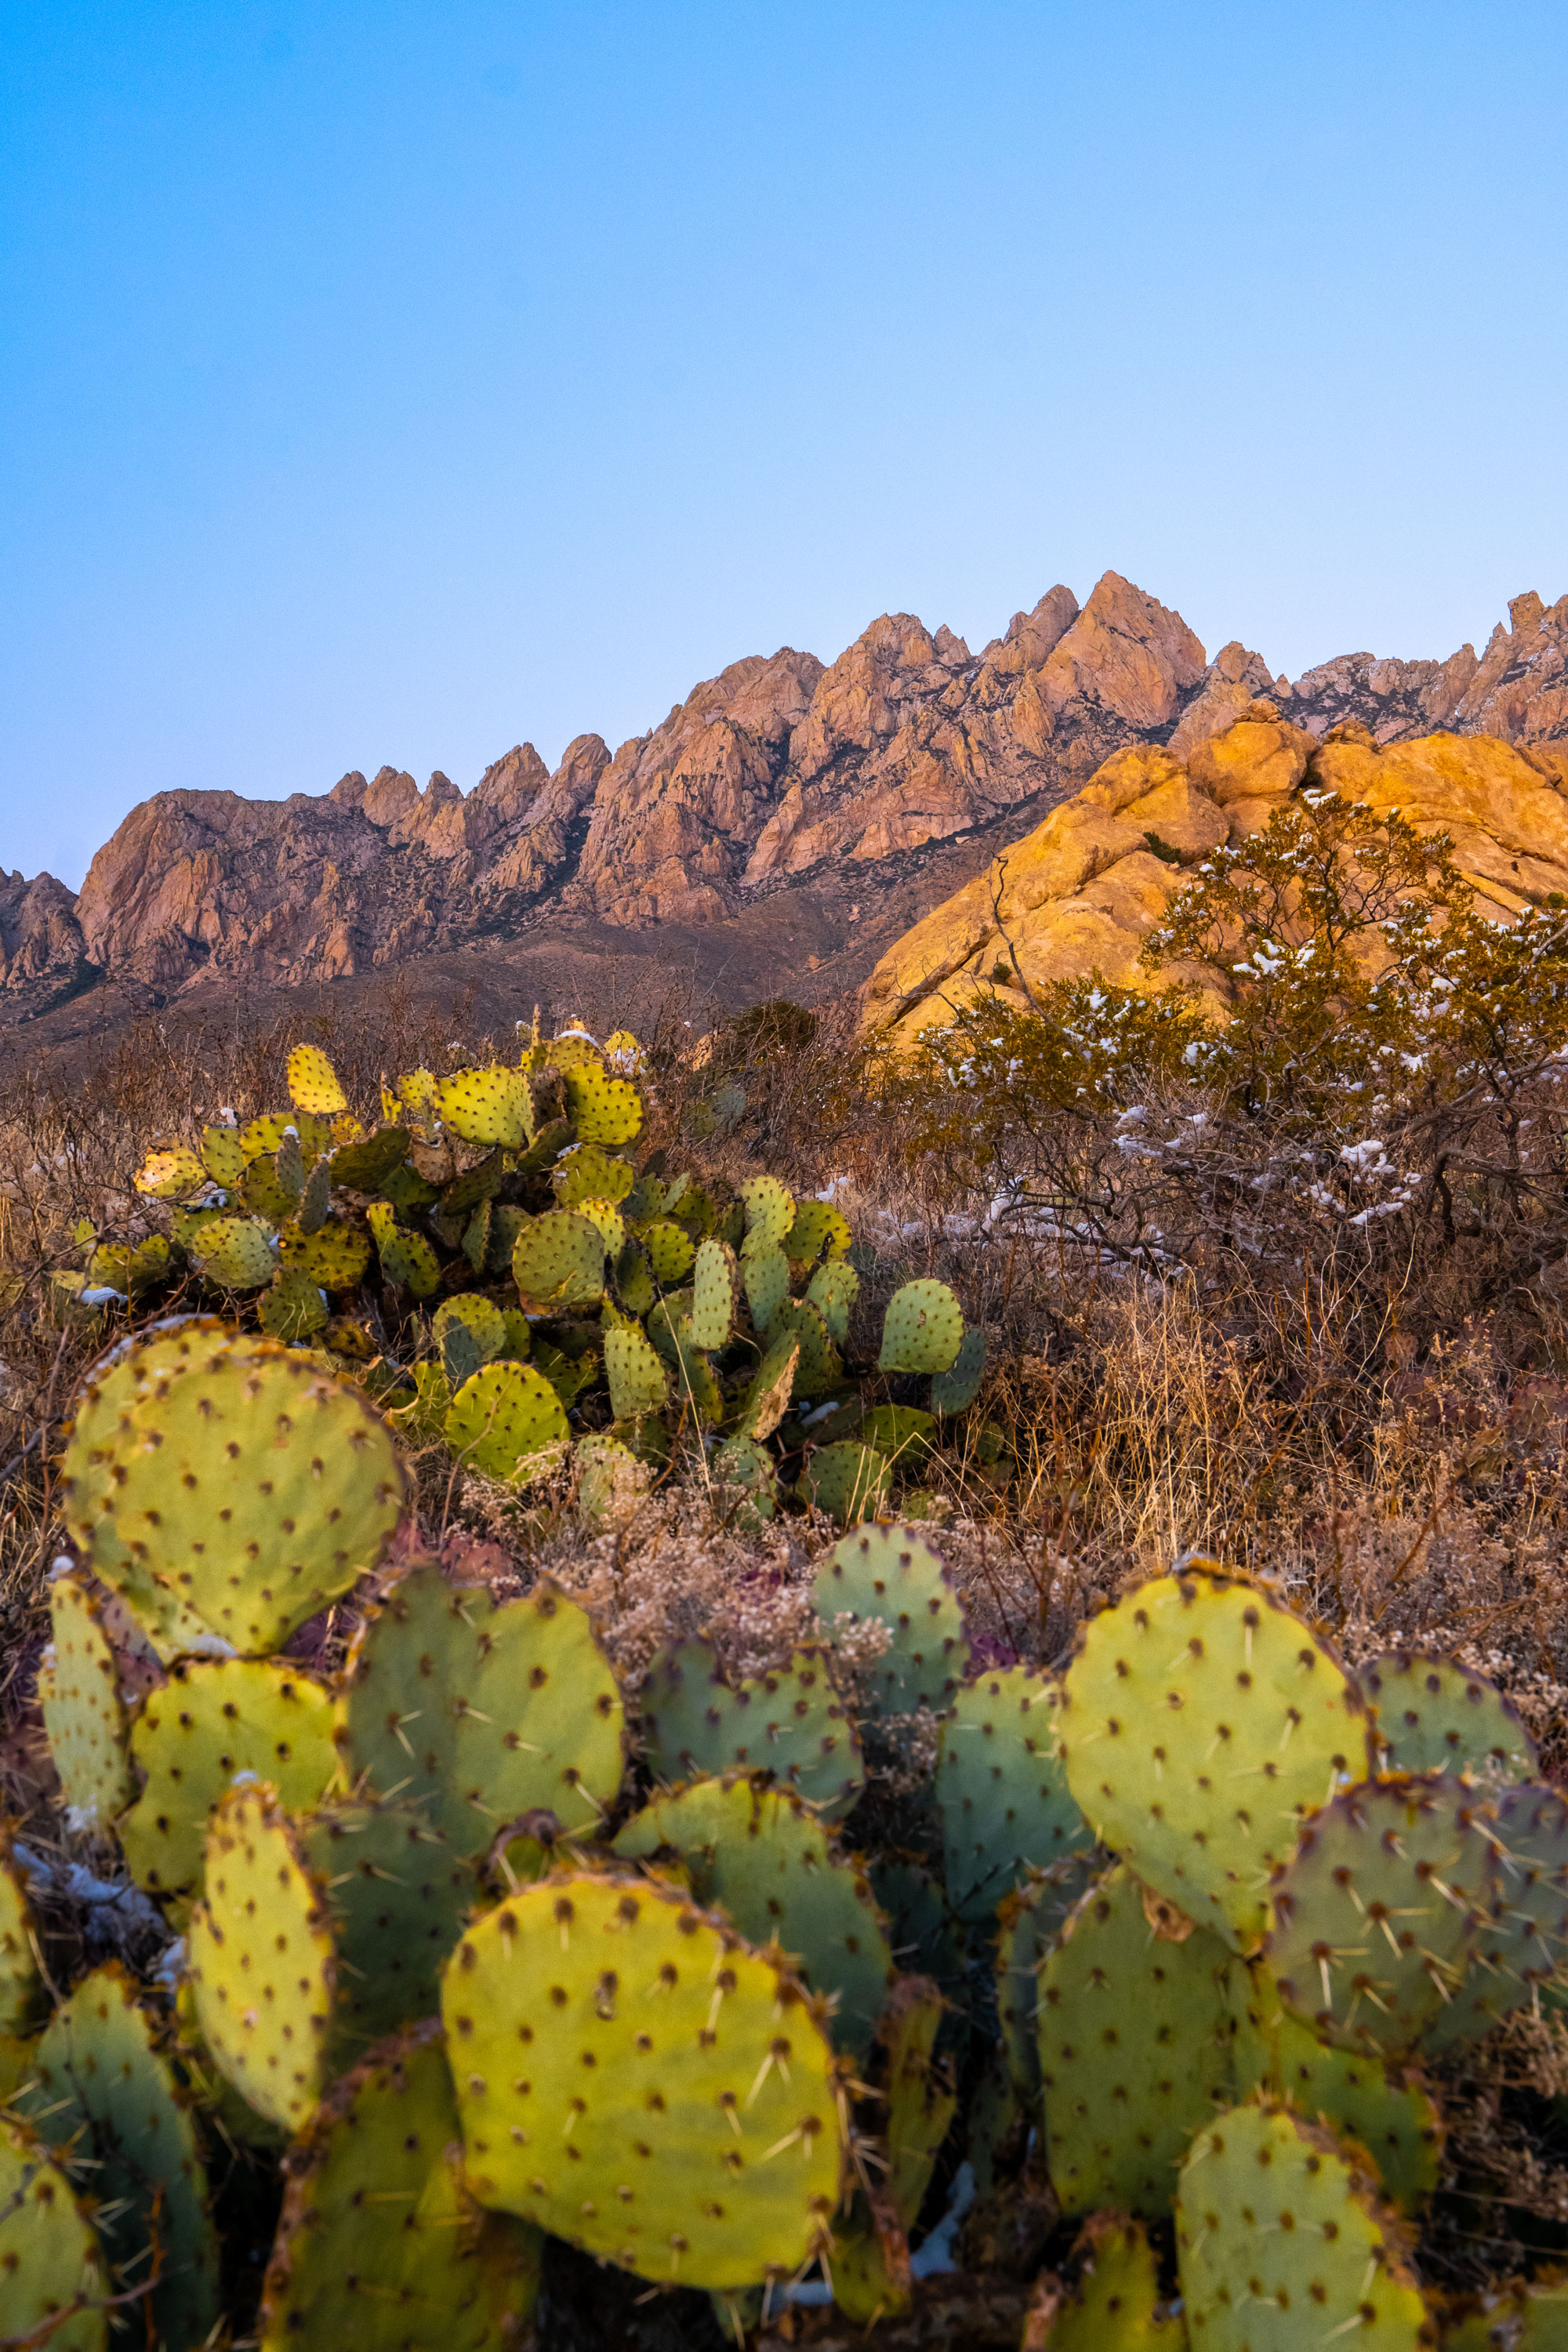 organ mountain landscape photo with cactus at close range